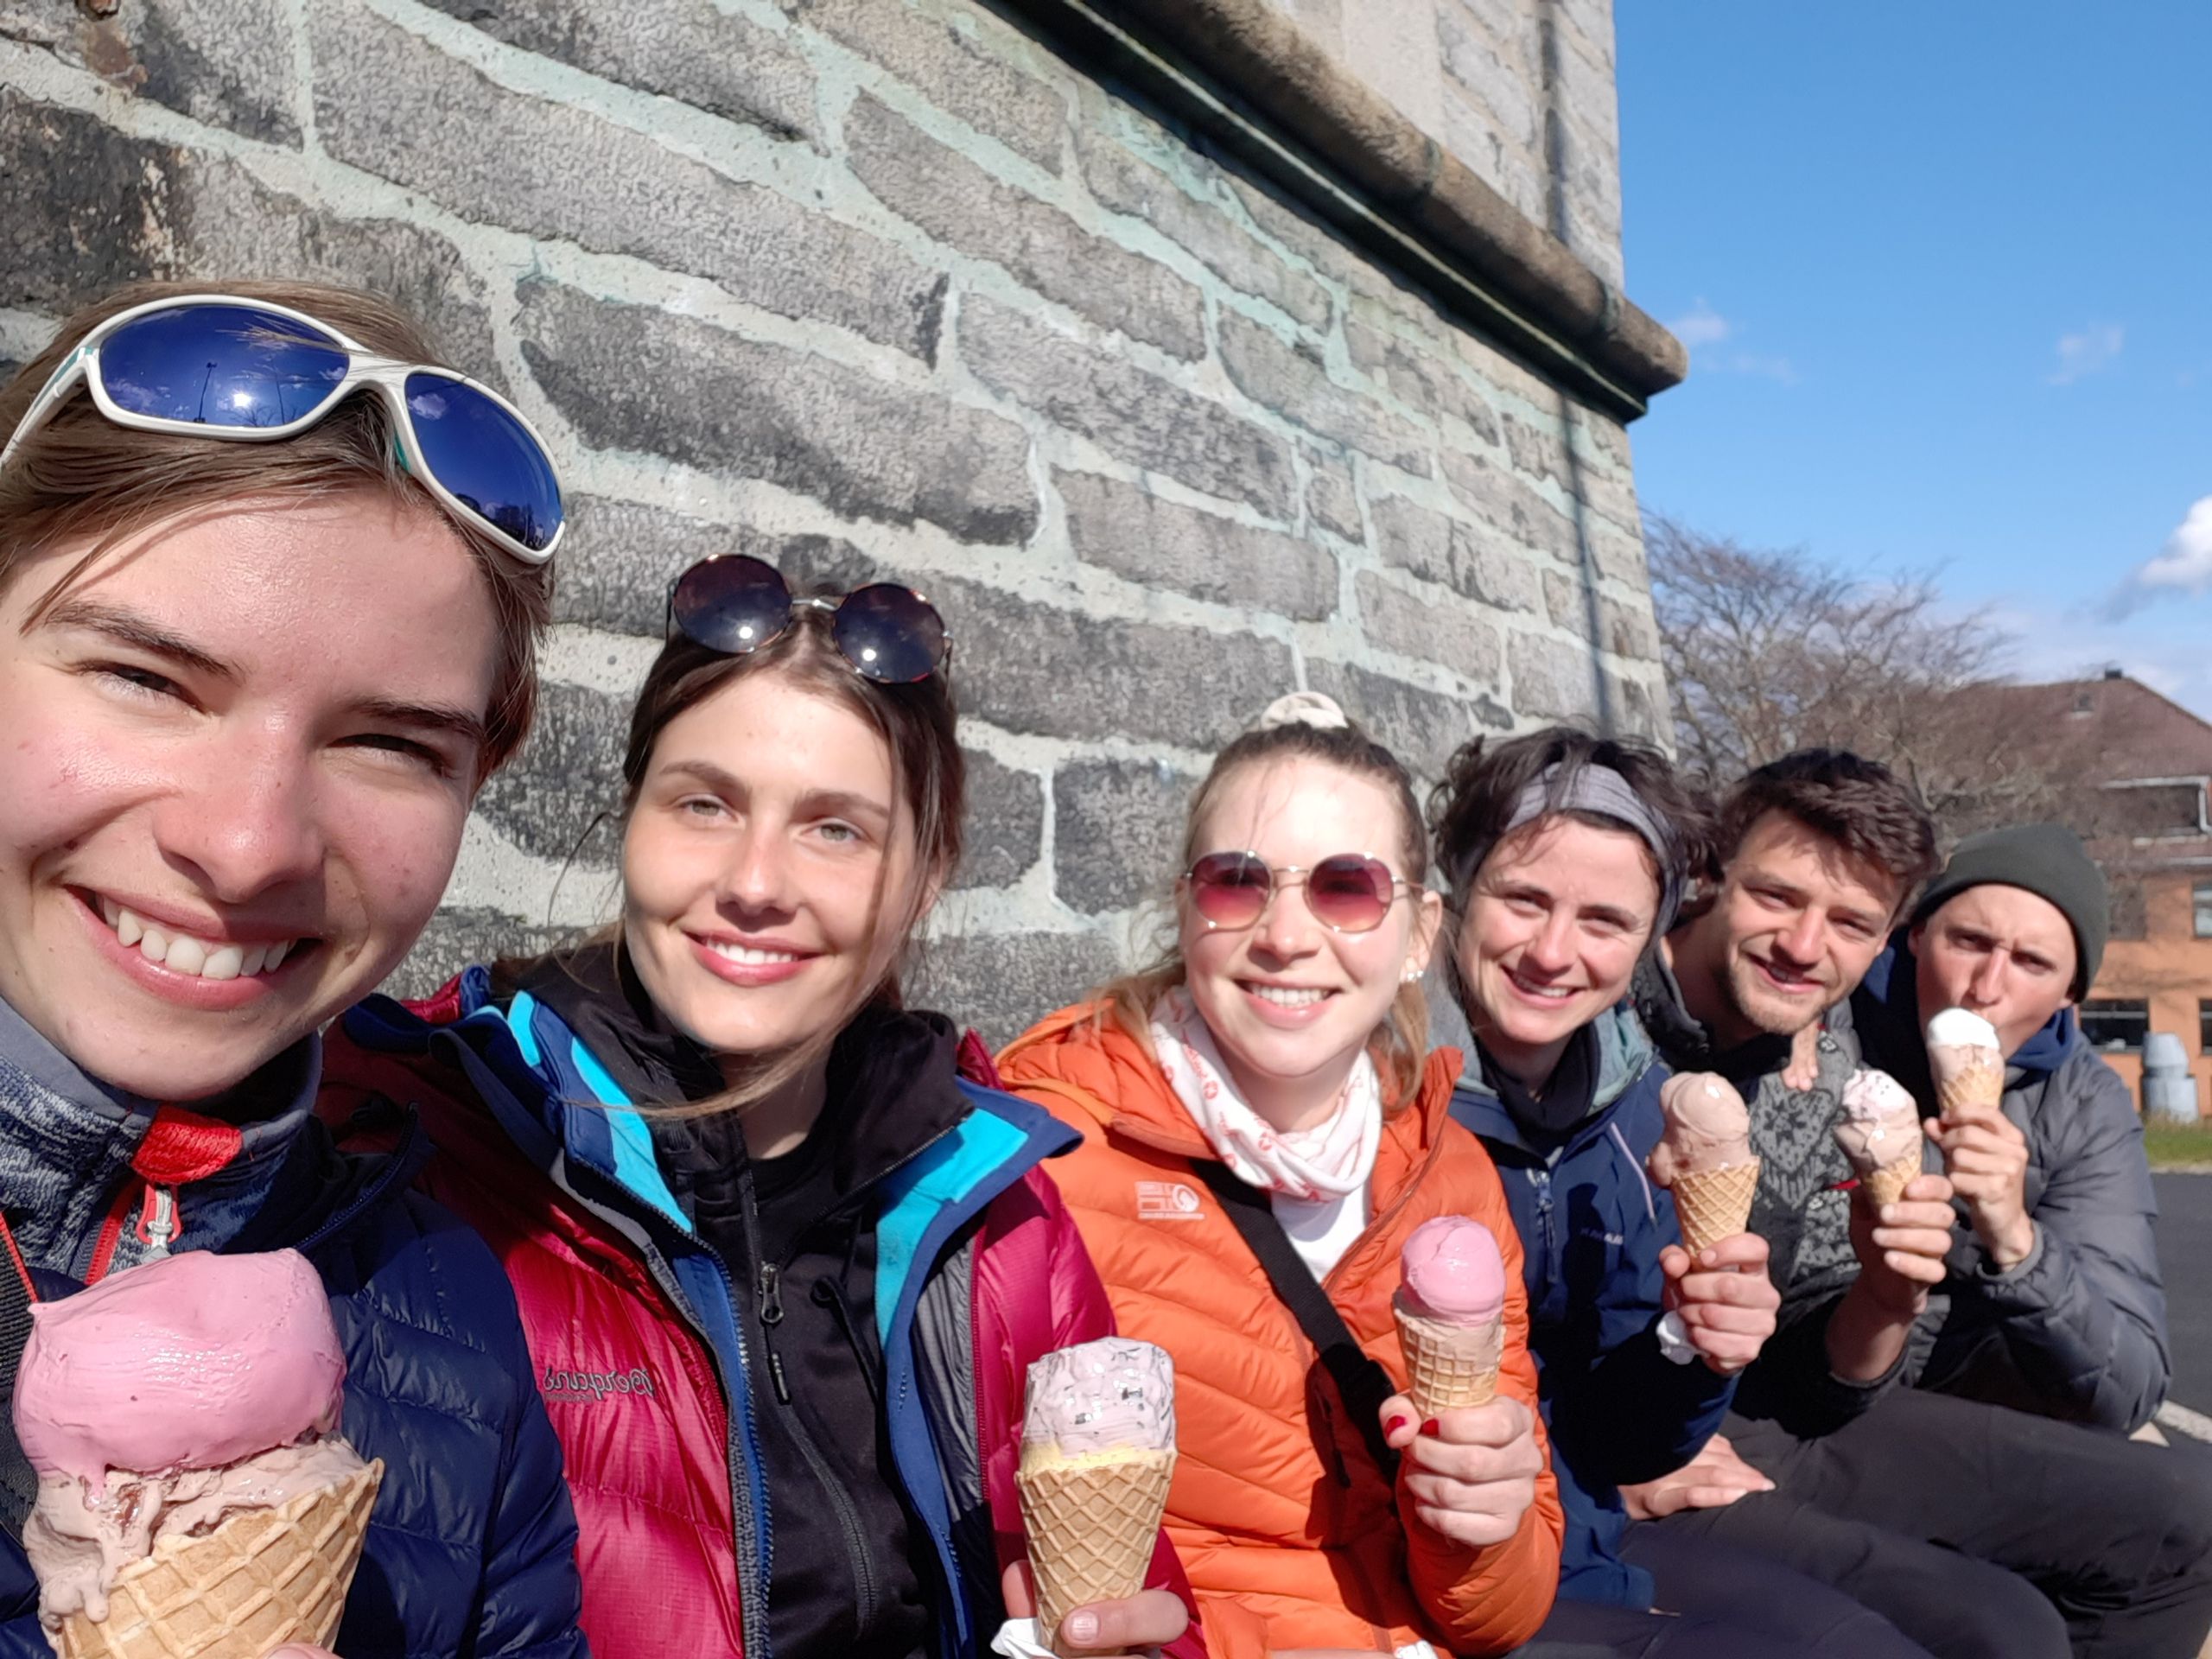 Ice cream in Stavanger